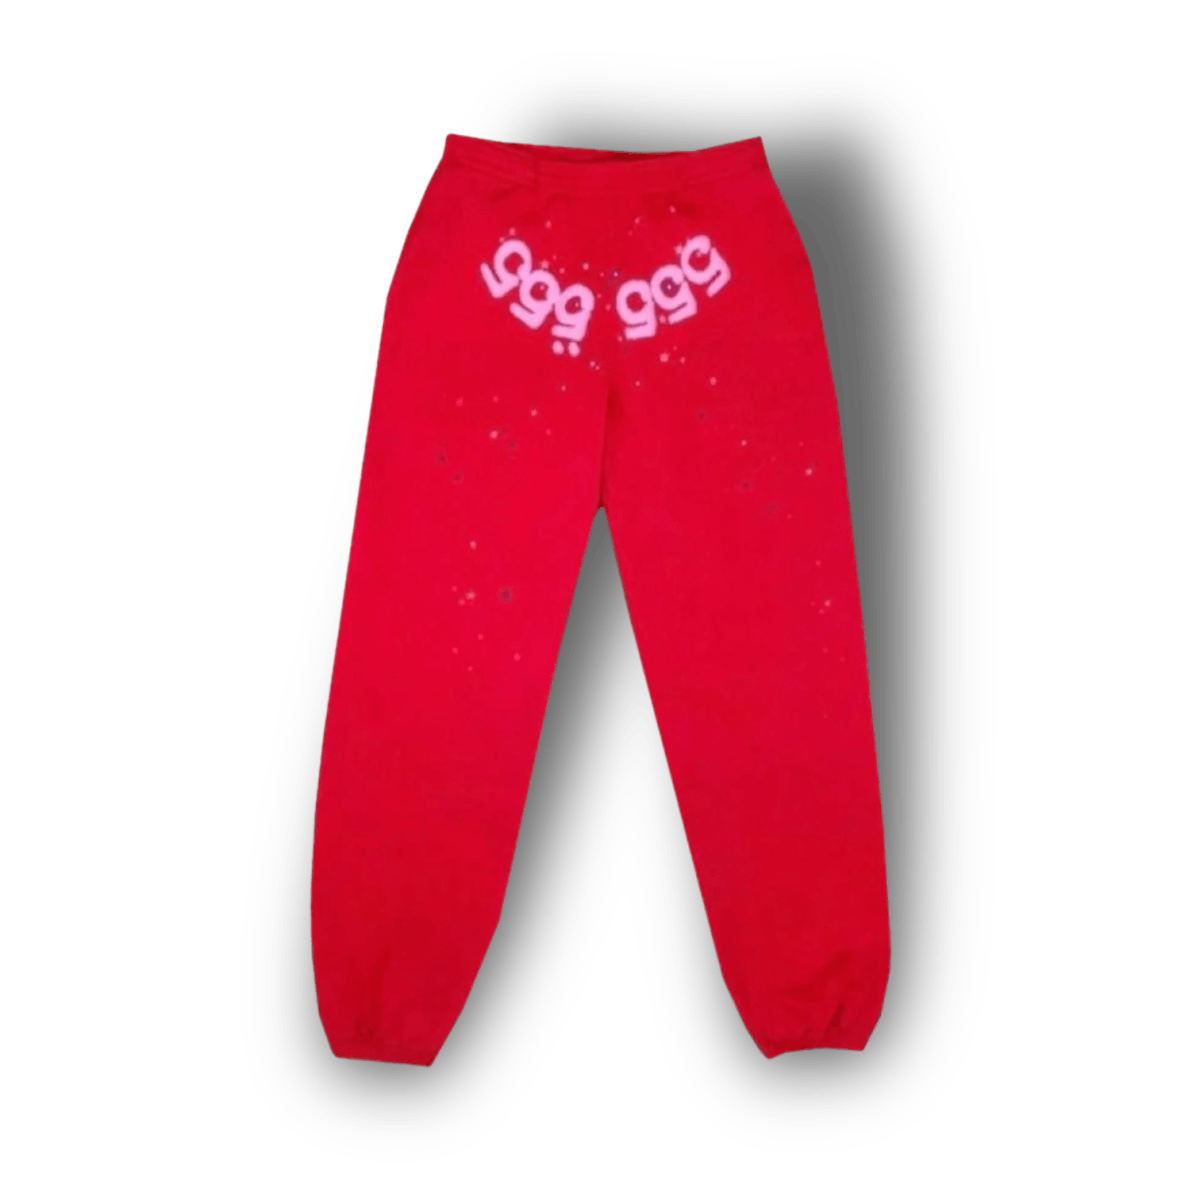 Sp5der Worldwide Red Angel Number 555 Sweatpants Red - Hoodie - Spider - Jawns on Fire